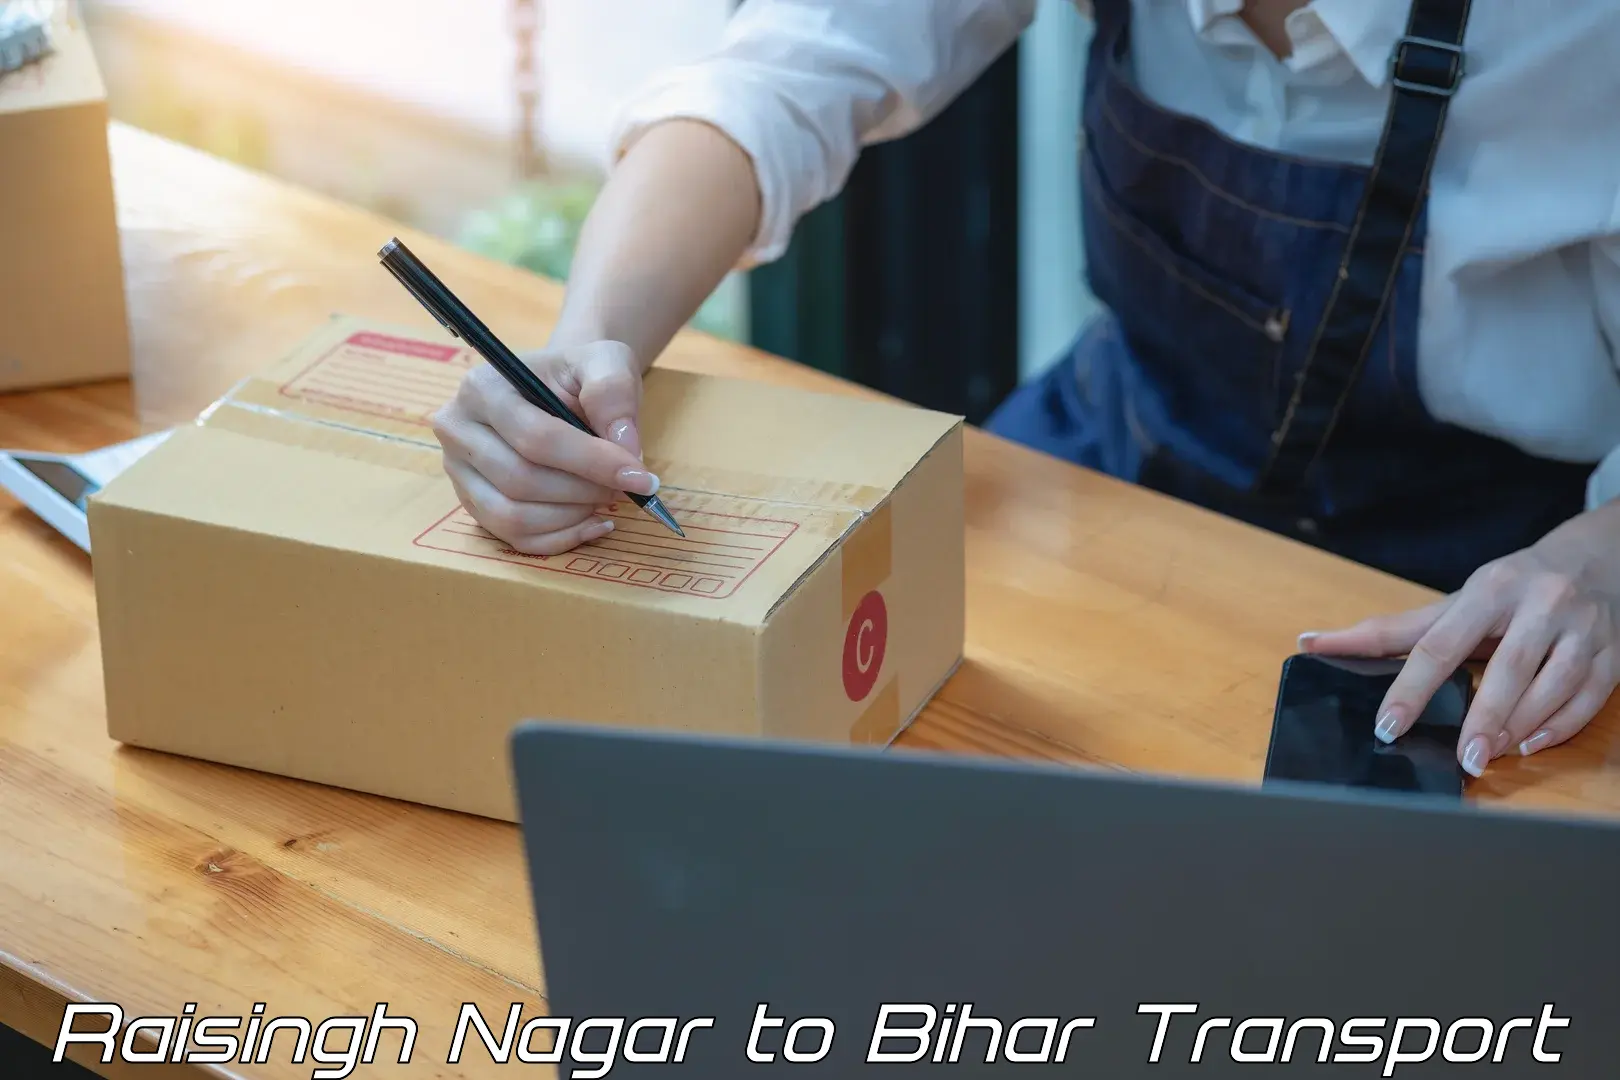 Transport shared services Raisingh Nagar to Bihar